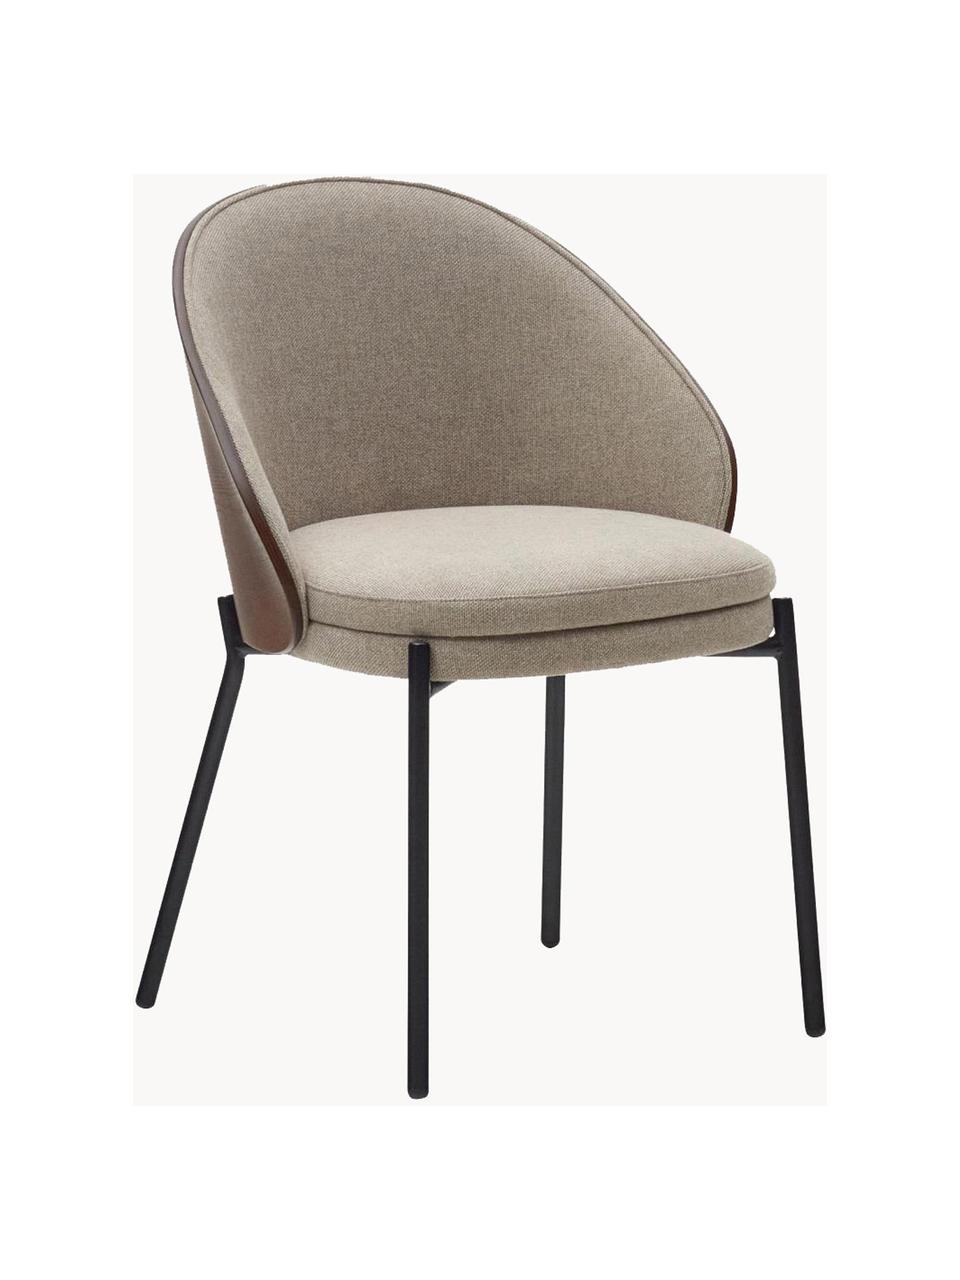 Žinylková polstrovaná židle Eamy, Béžová, černá, Š 55 cm, H 53 cm